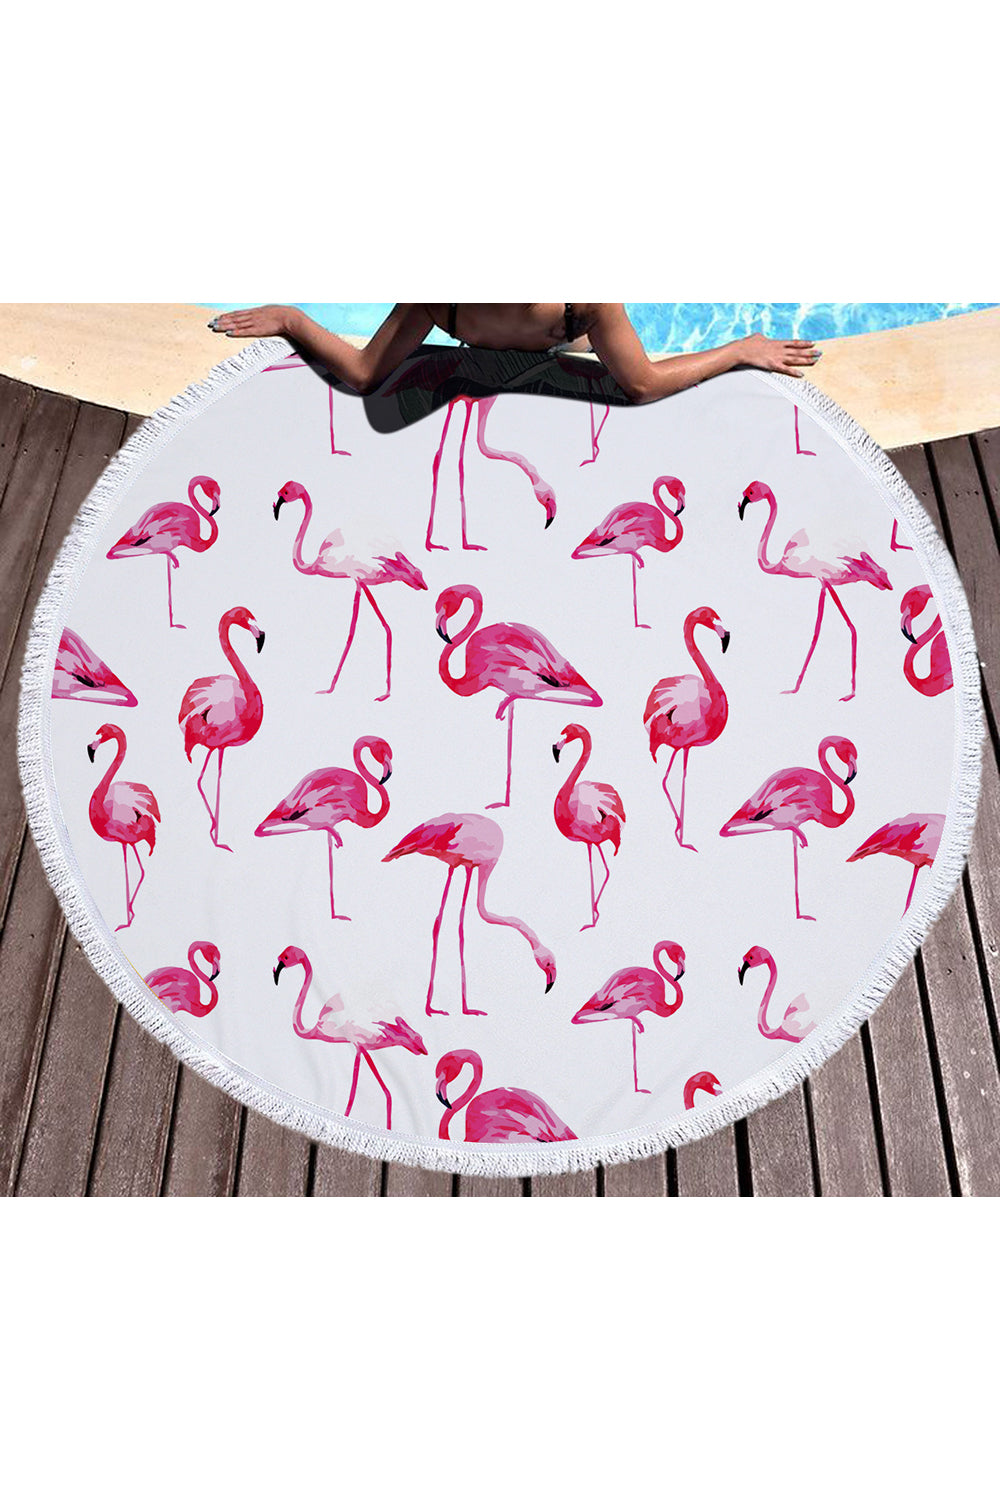 Hot Tropical Flamingo Round Beach Cover Up Beach Mat Towel Shawl Yoga Mat Summer Sarong Cloak Camping Mat